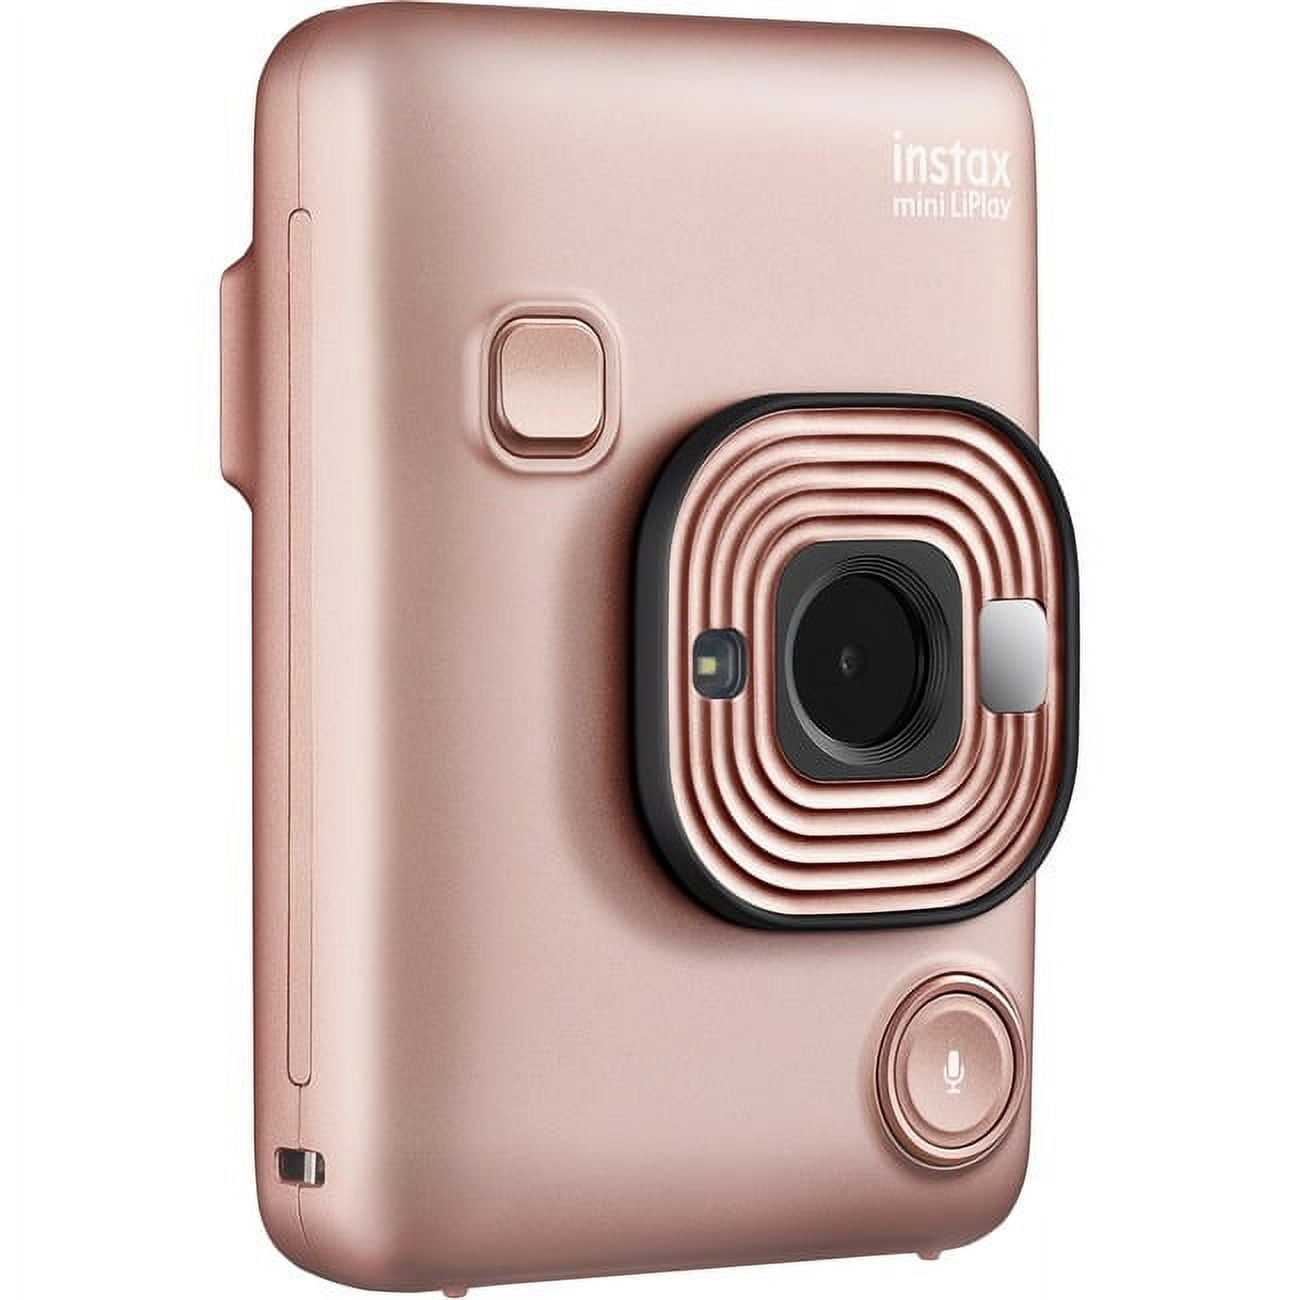 Fujifilm Instax Mini LiPlay is its smallest, lightest hybrid instant camera  - CNET